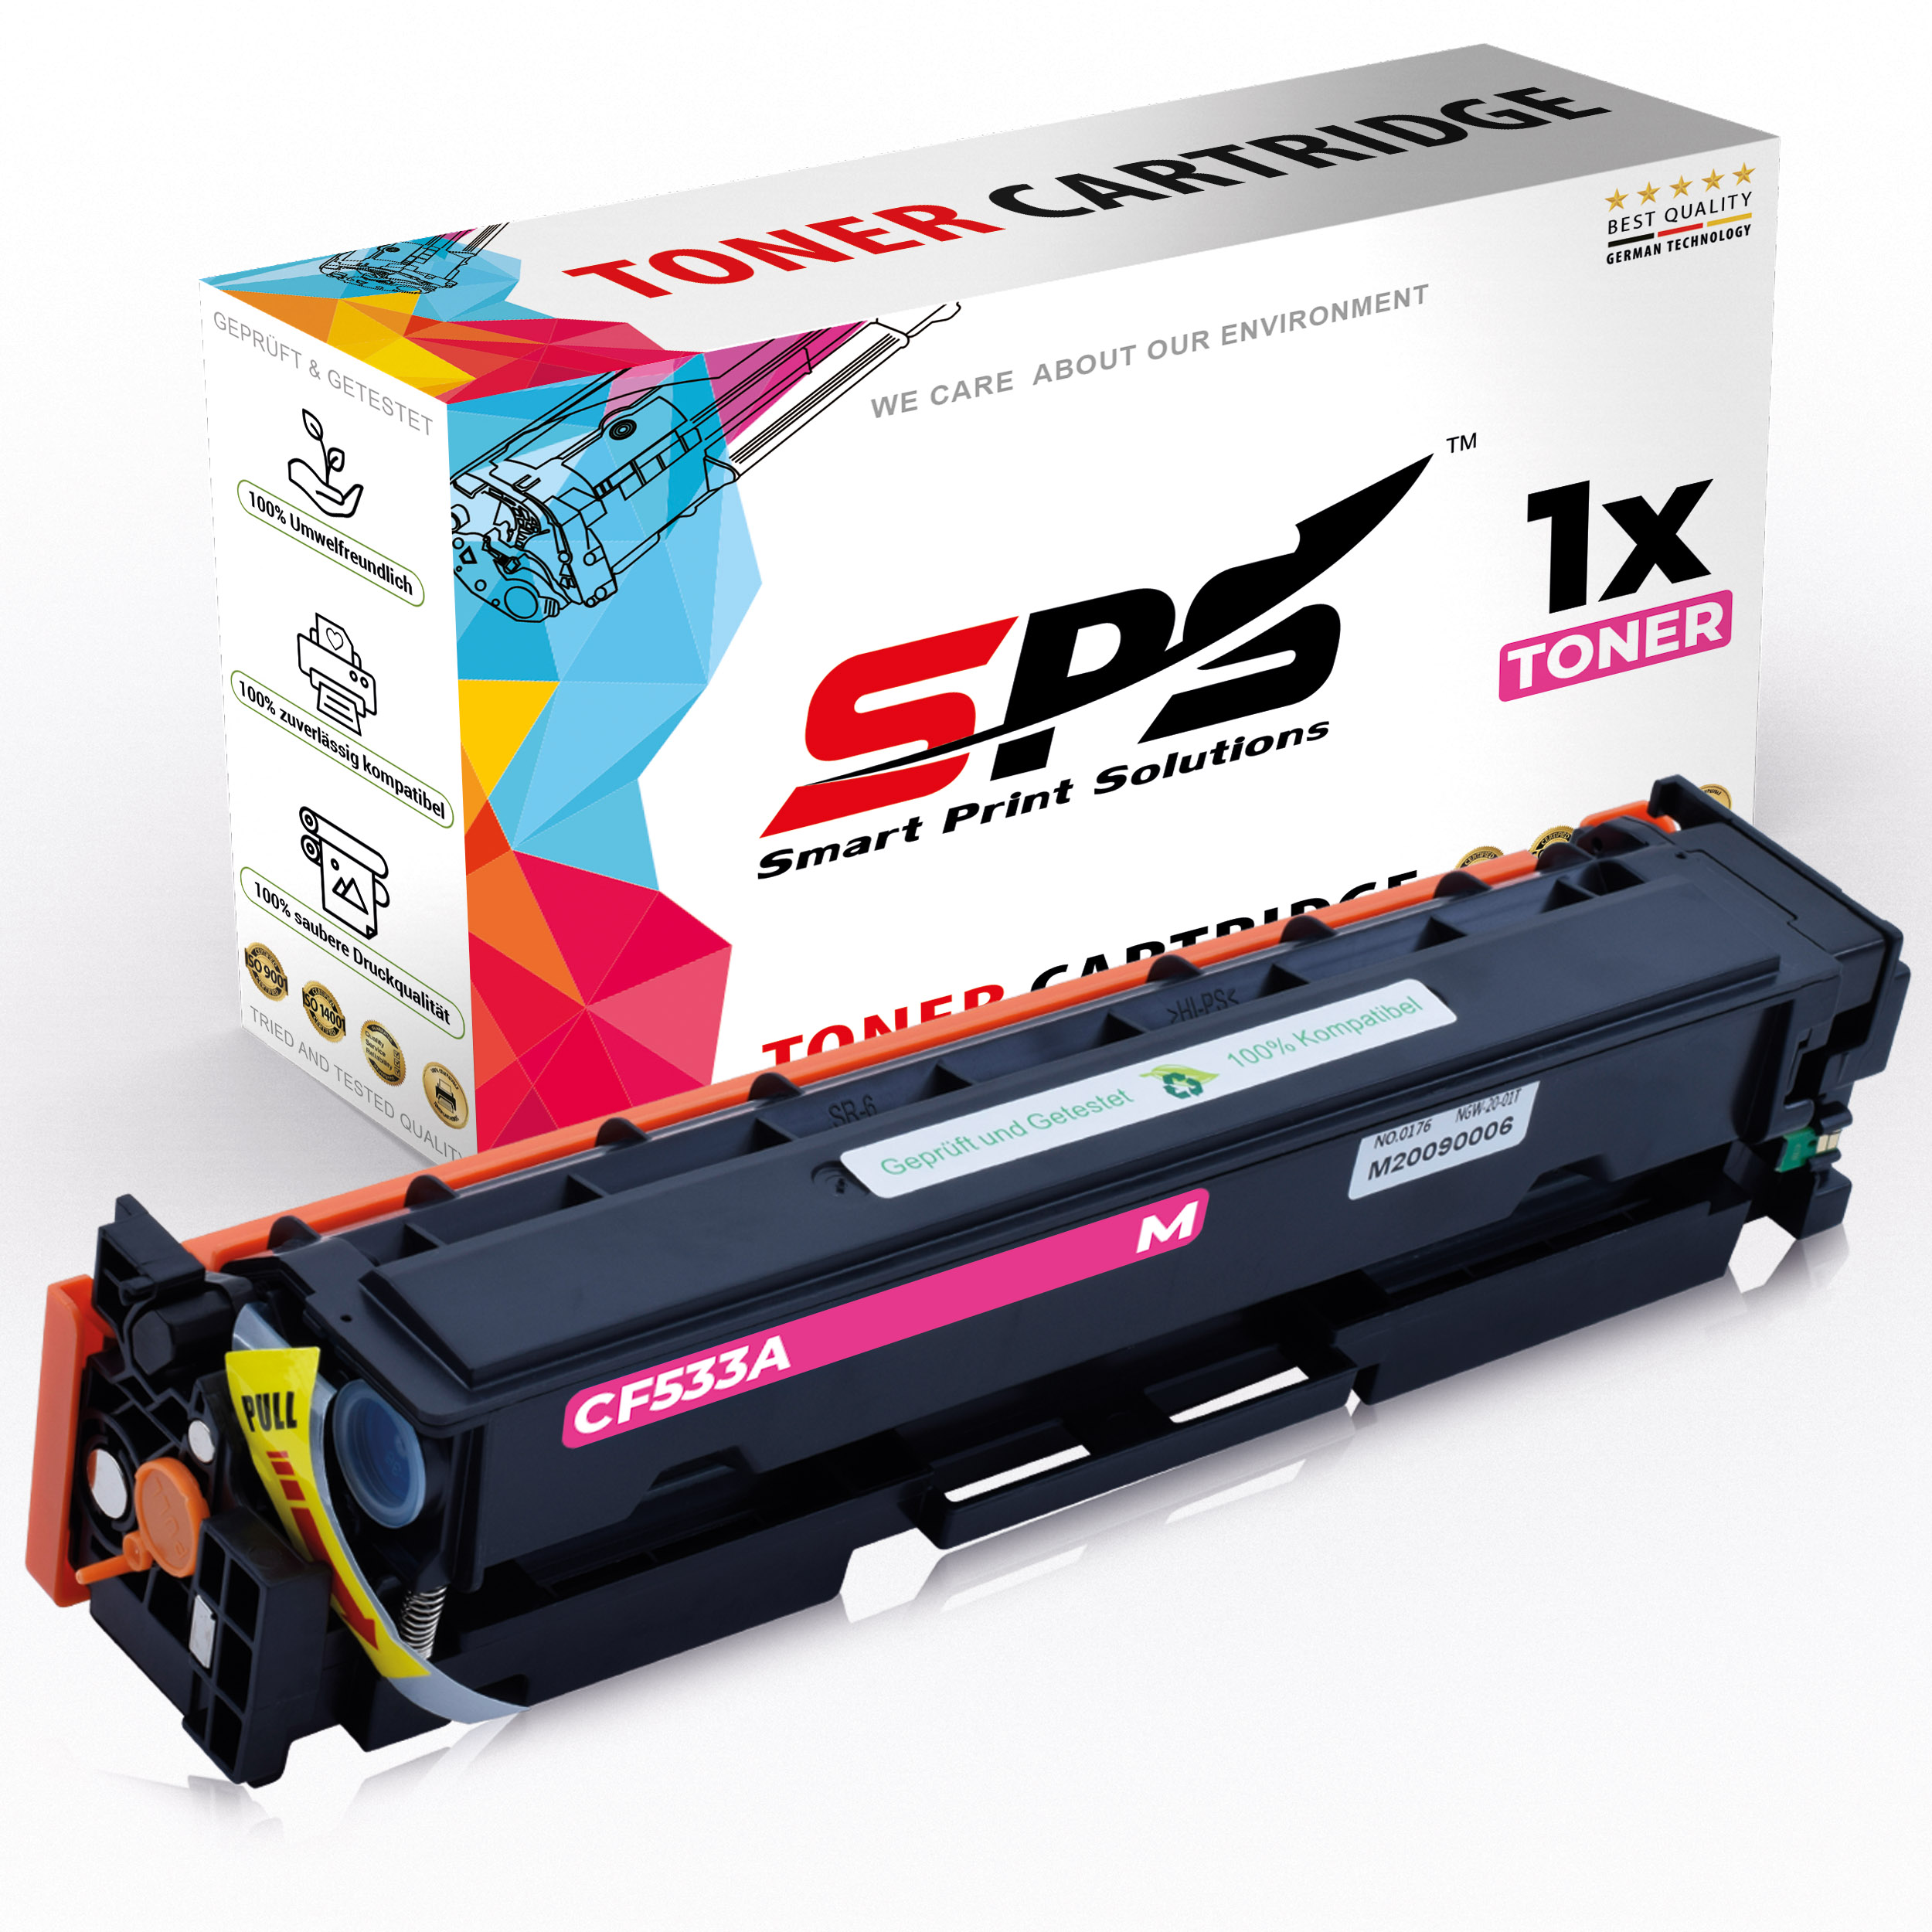 Laserjet S-16650 CF533A Magenta M180) Pro (205A Color MFP SPS / Toner